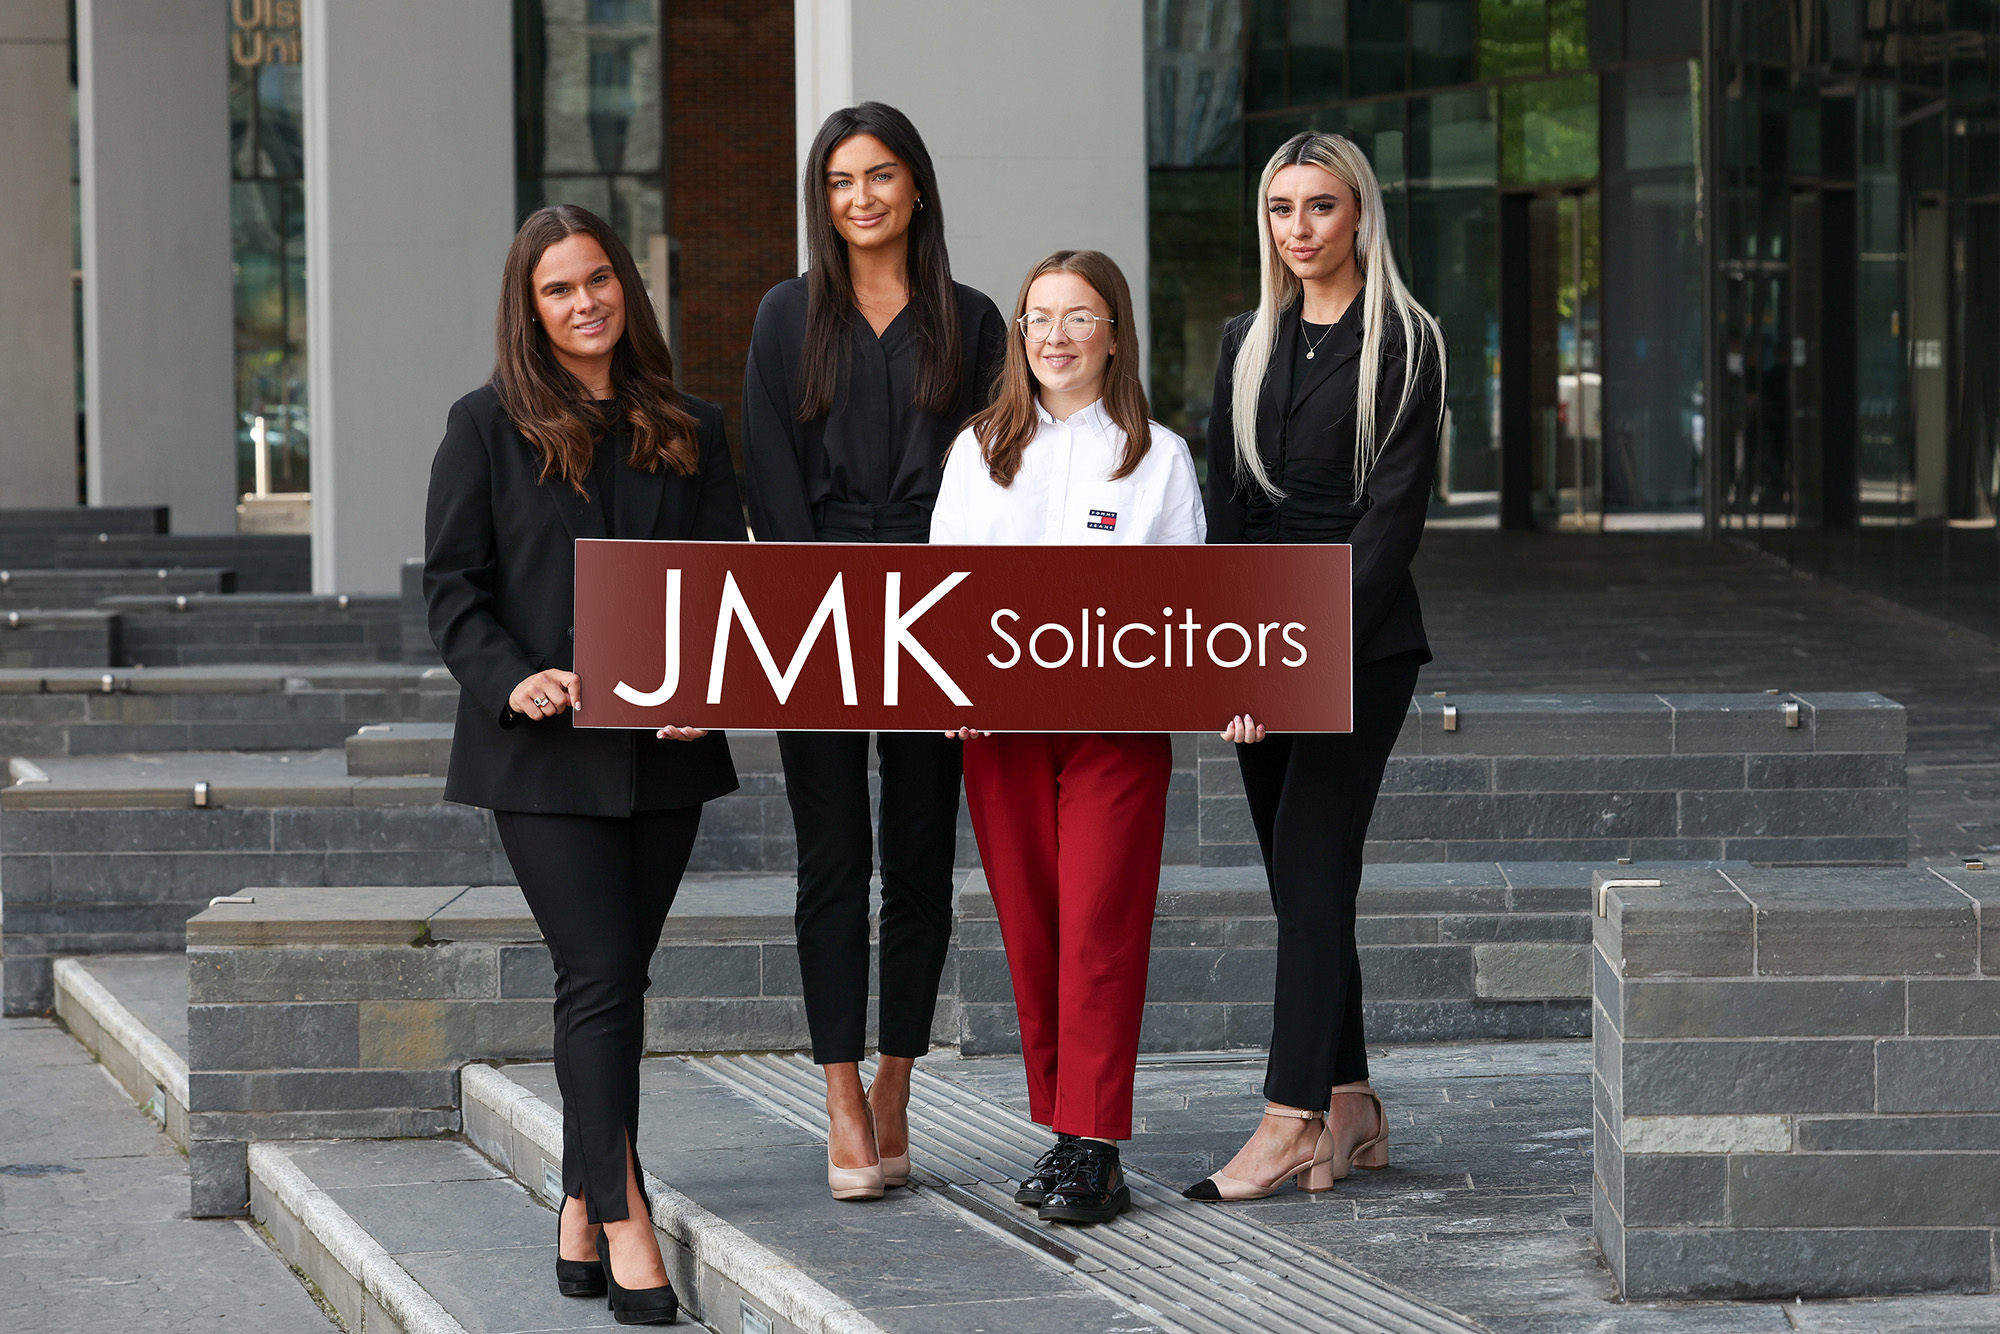 JMK Solicitors welcomes four new legal graduates